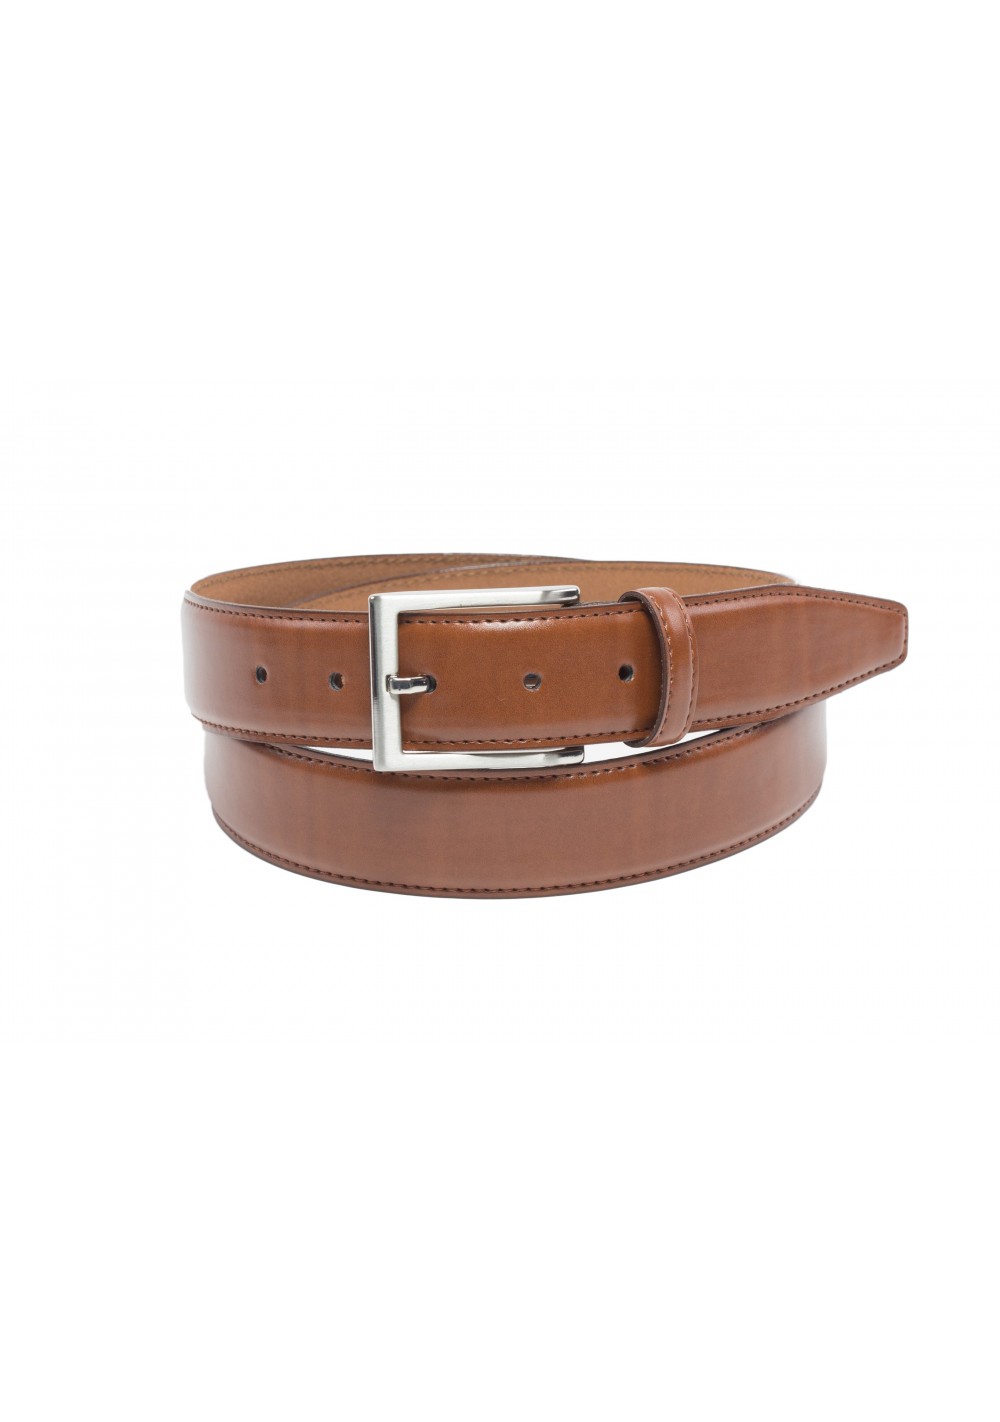 Belt Buckles For Men Wedding Belt 3 cm 1.2 in Handmade Personalized Gift Belt Distressed Cognac Brown Leather Belt Men